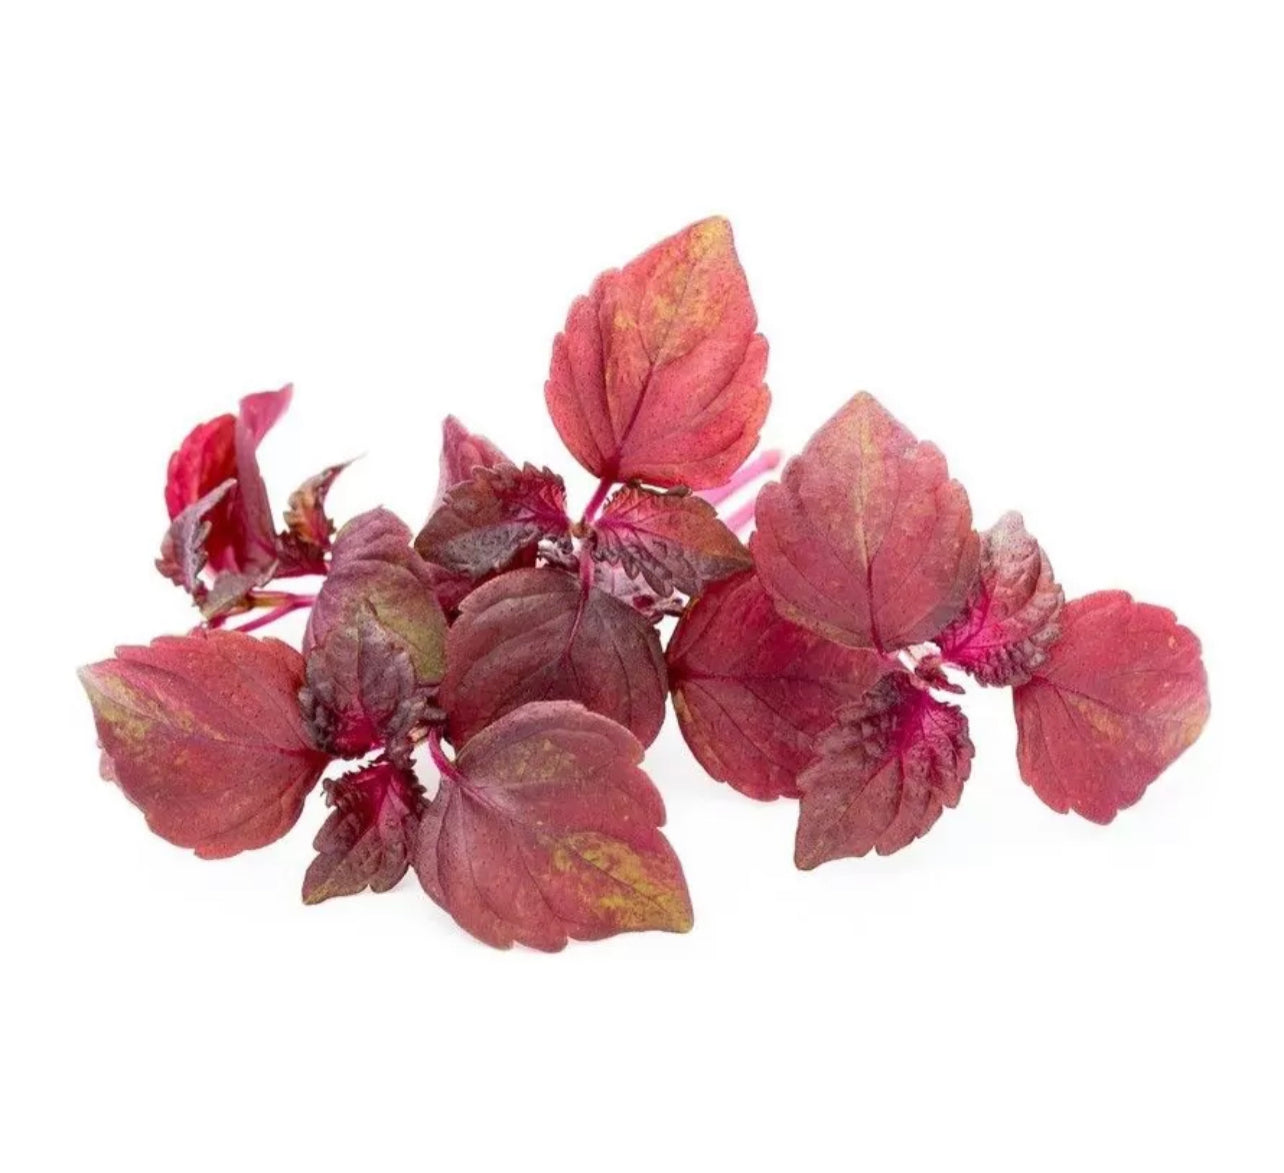 Shiso rouge petites feuilles - 30g